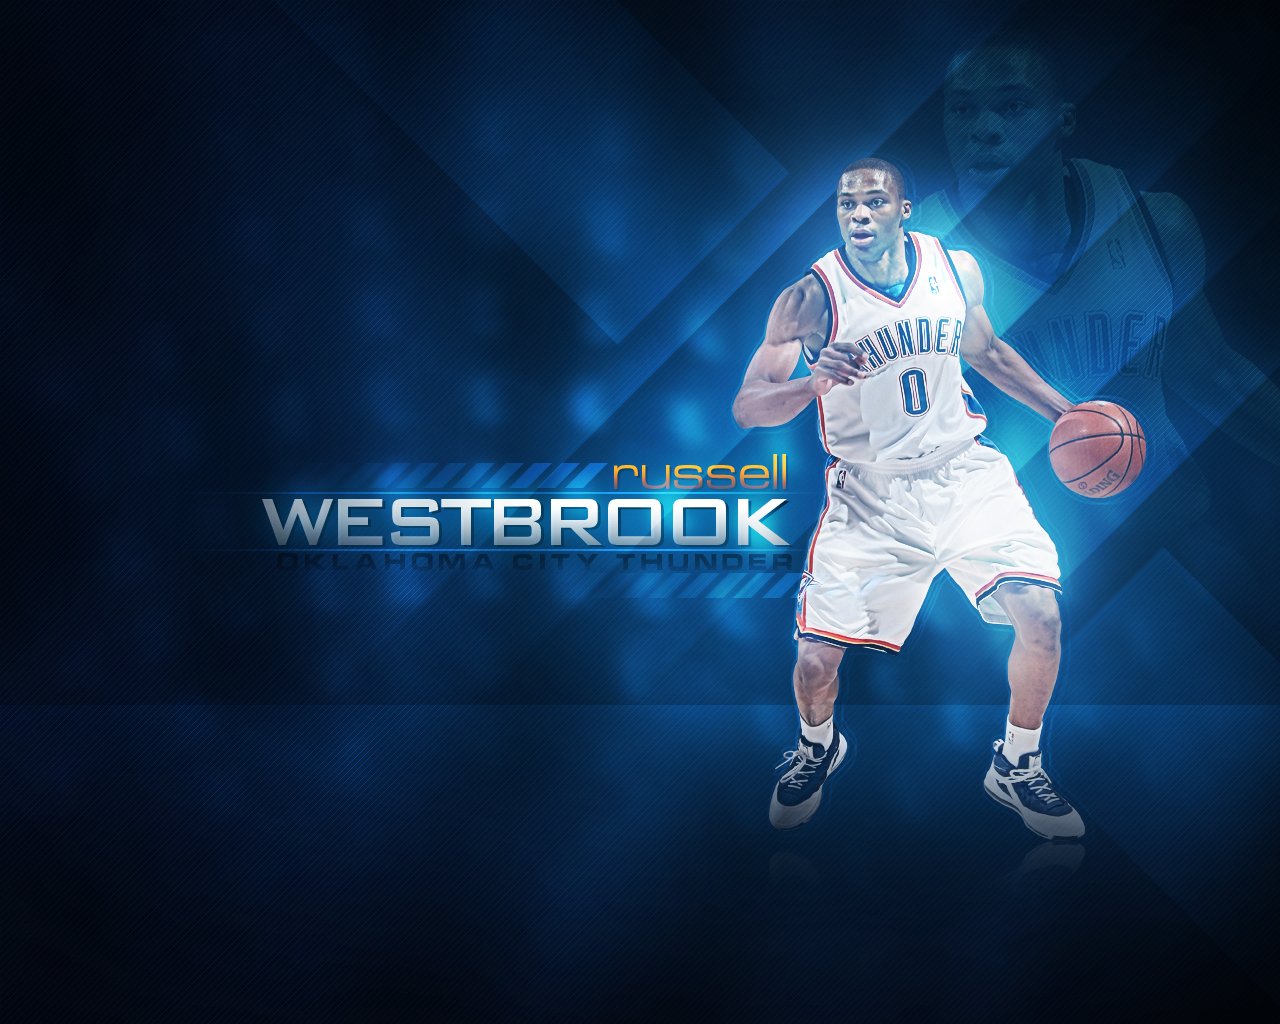 Okc Thunder Westbrook And Durant Wallpaper | HD Pix